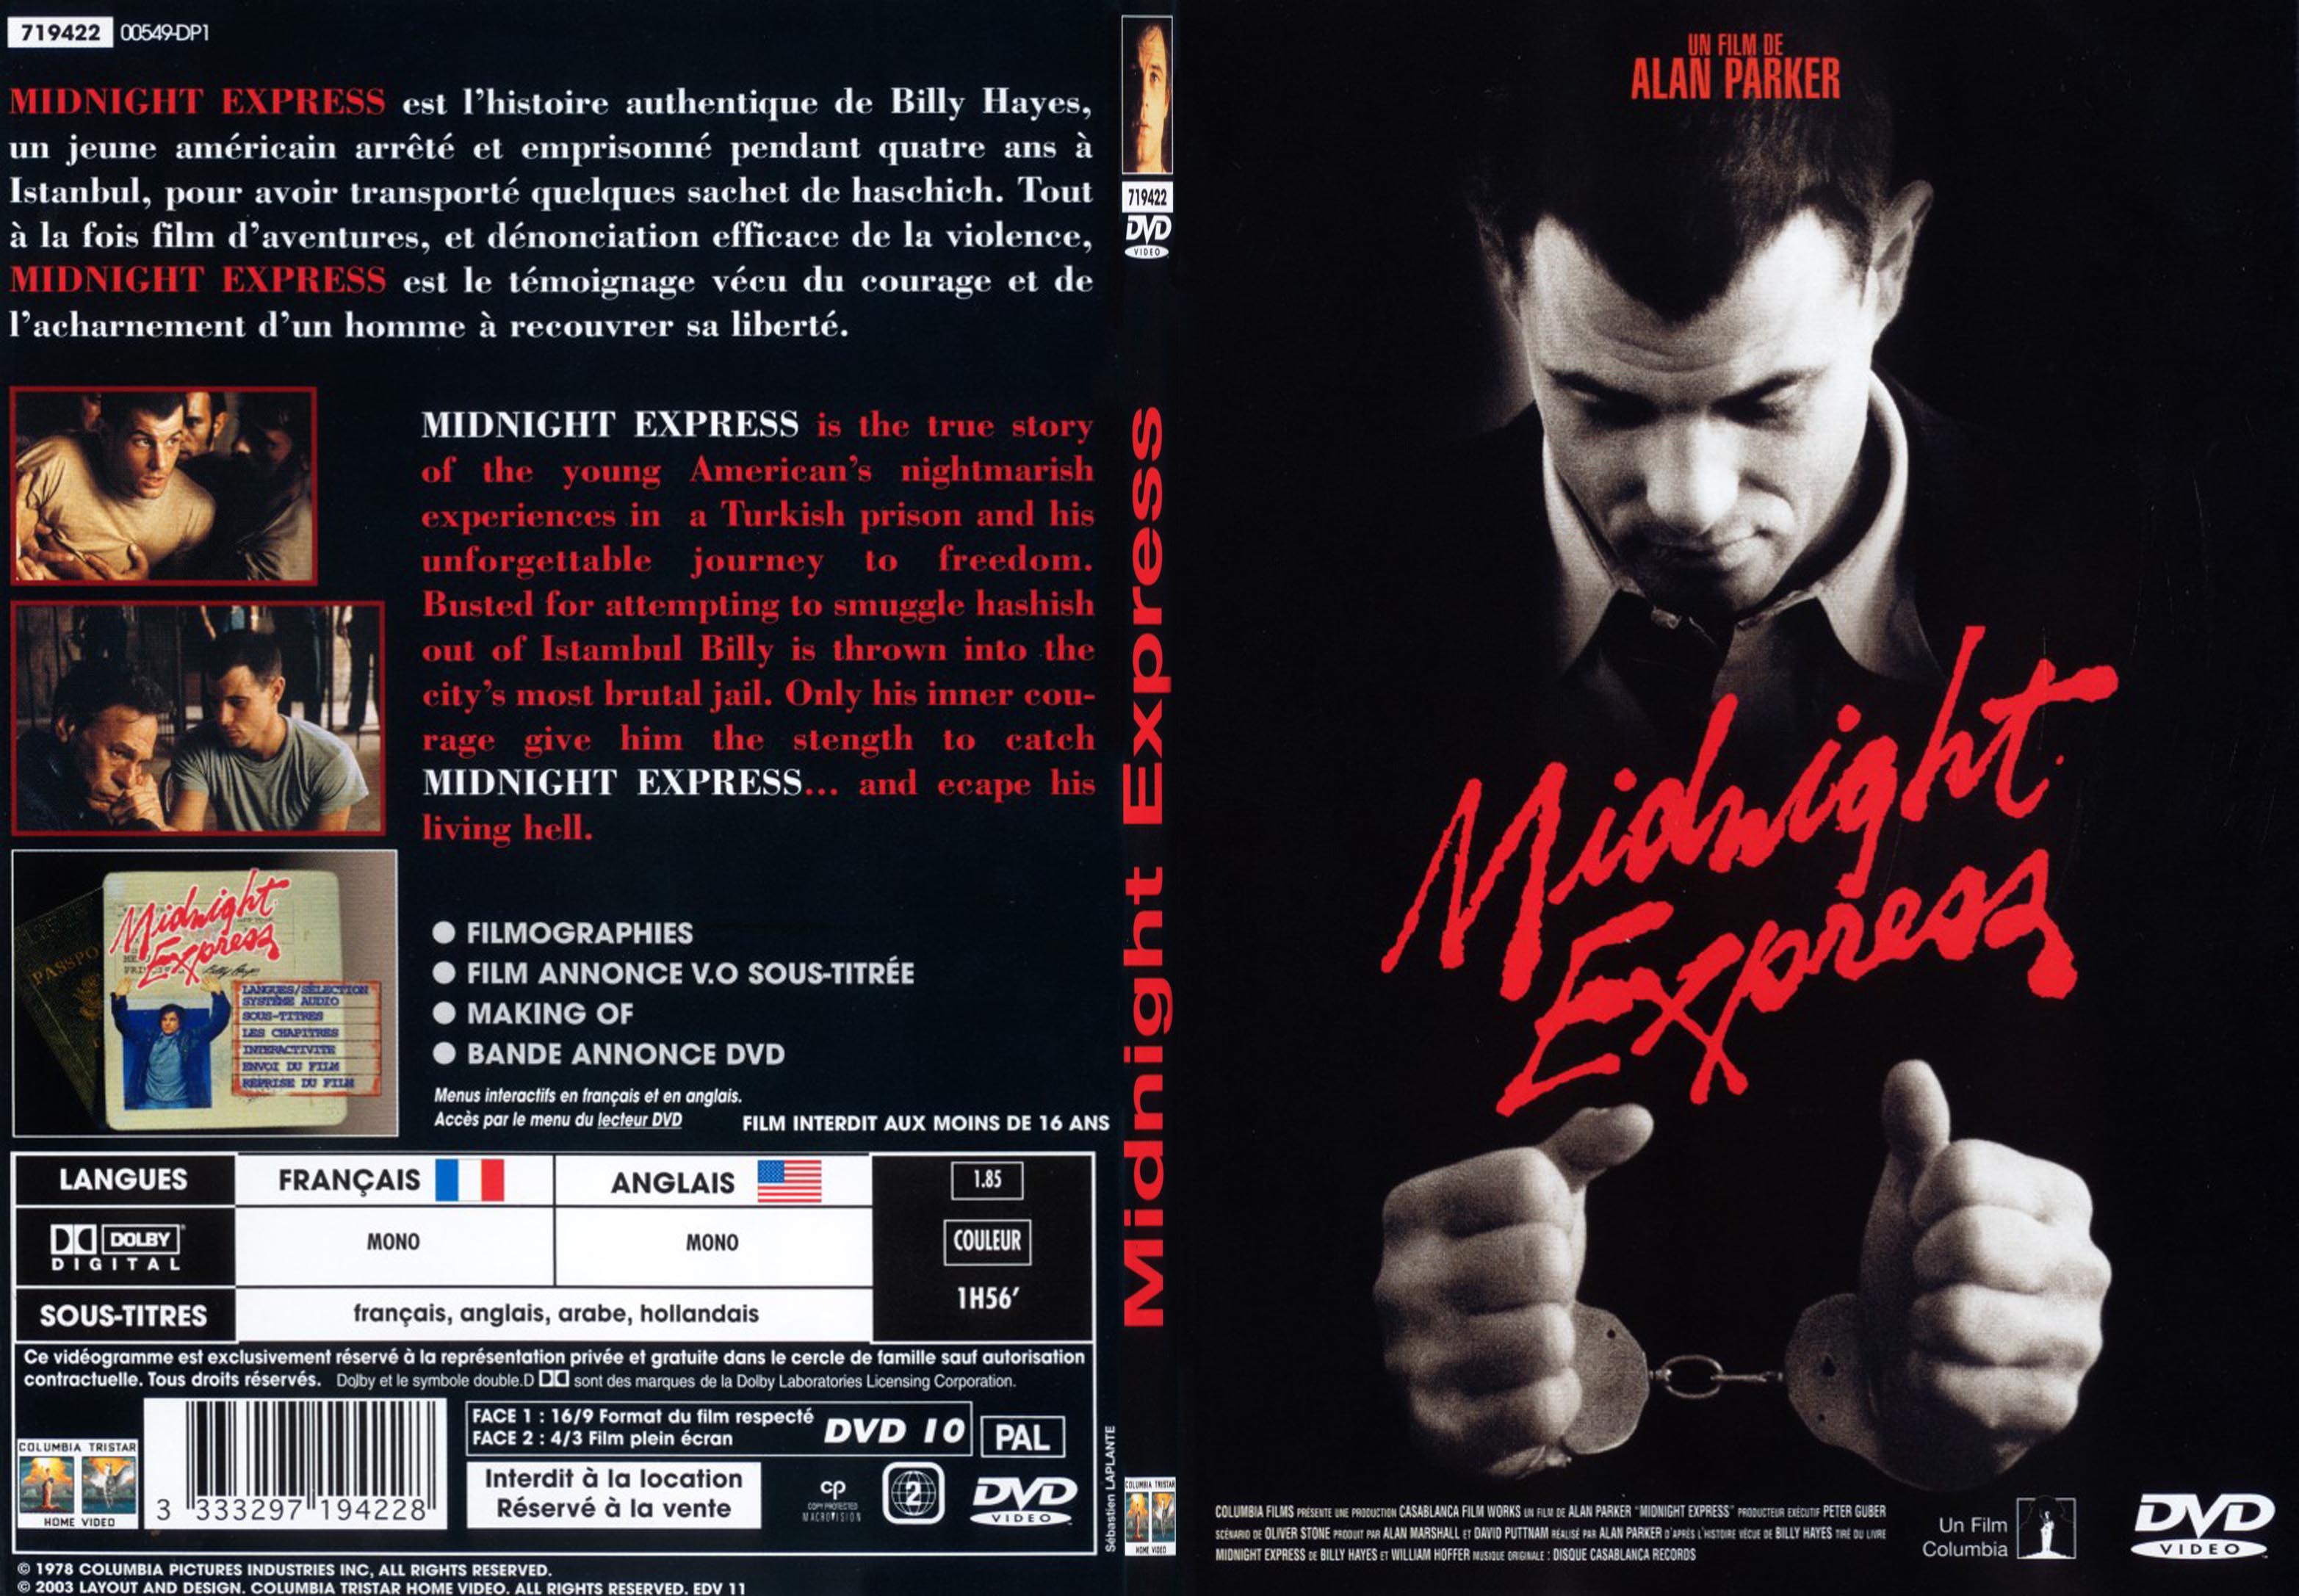 Jaquette DVD Midnight express - SLIM